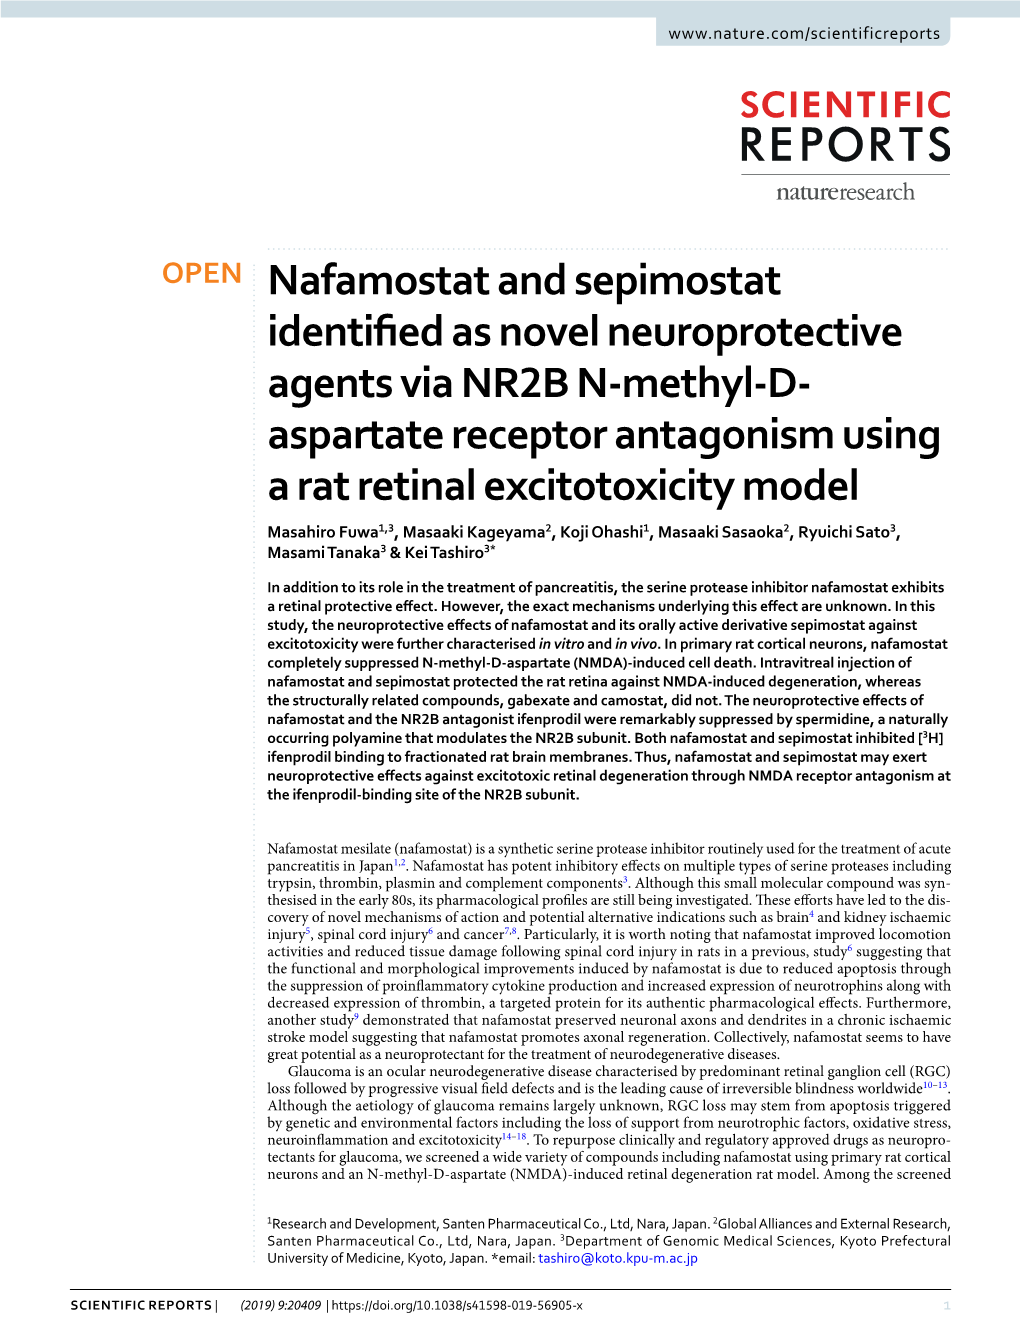 Nafamostat and Sepimostat Identified As Novel Neuroprotective Agents Via